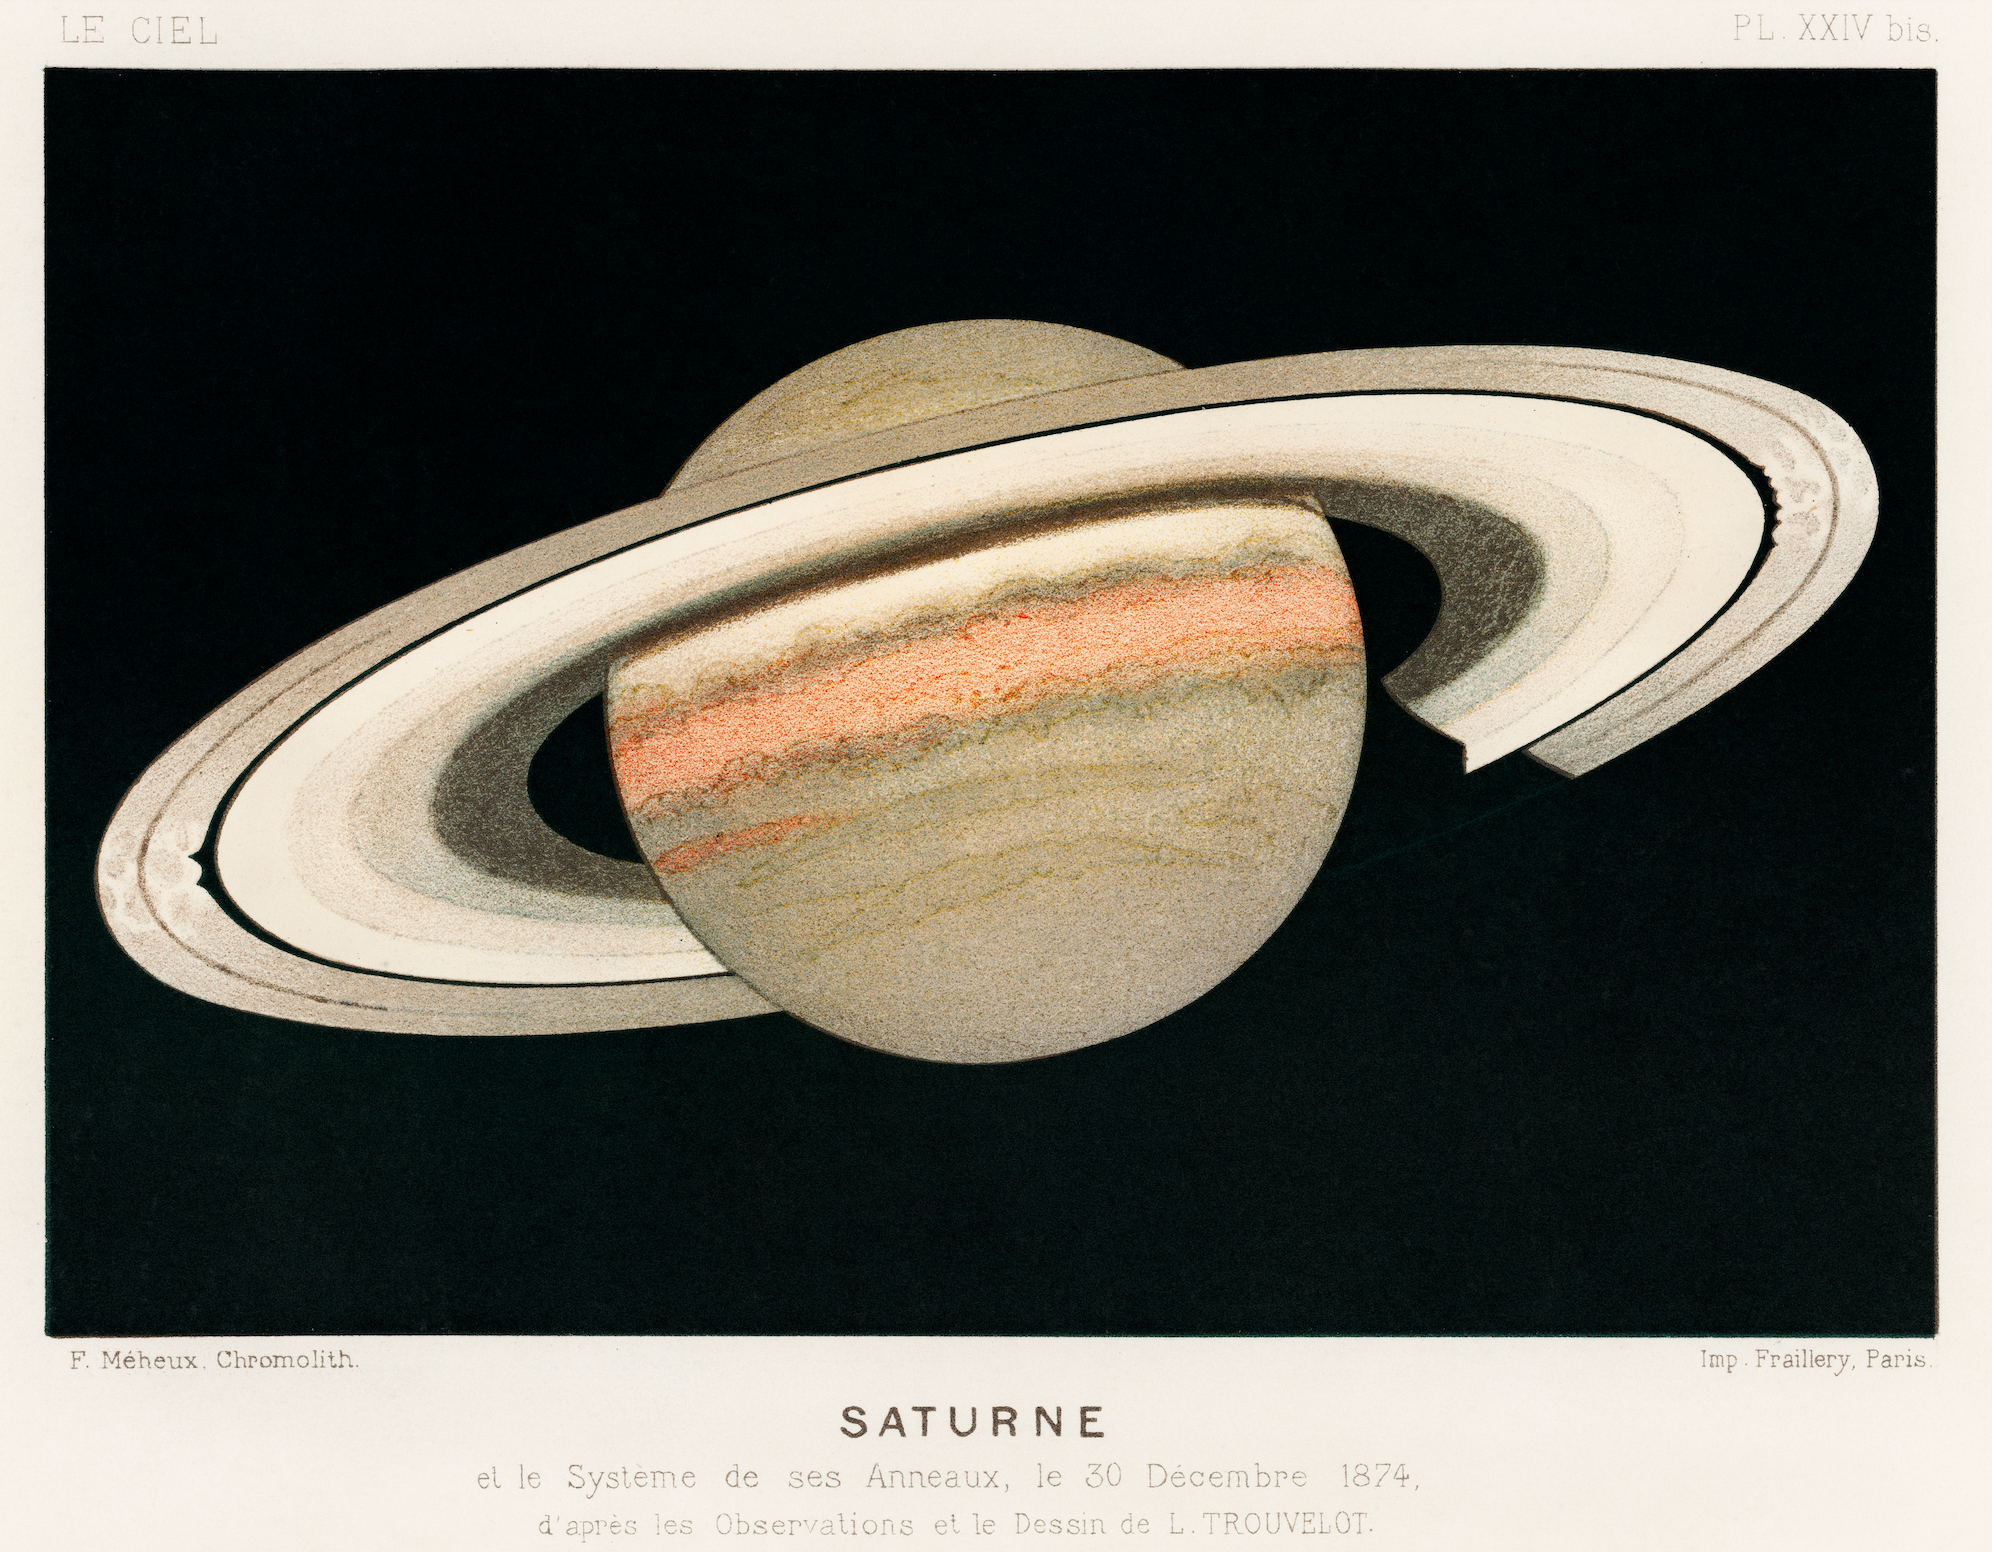 Litografi af Saturn